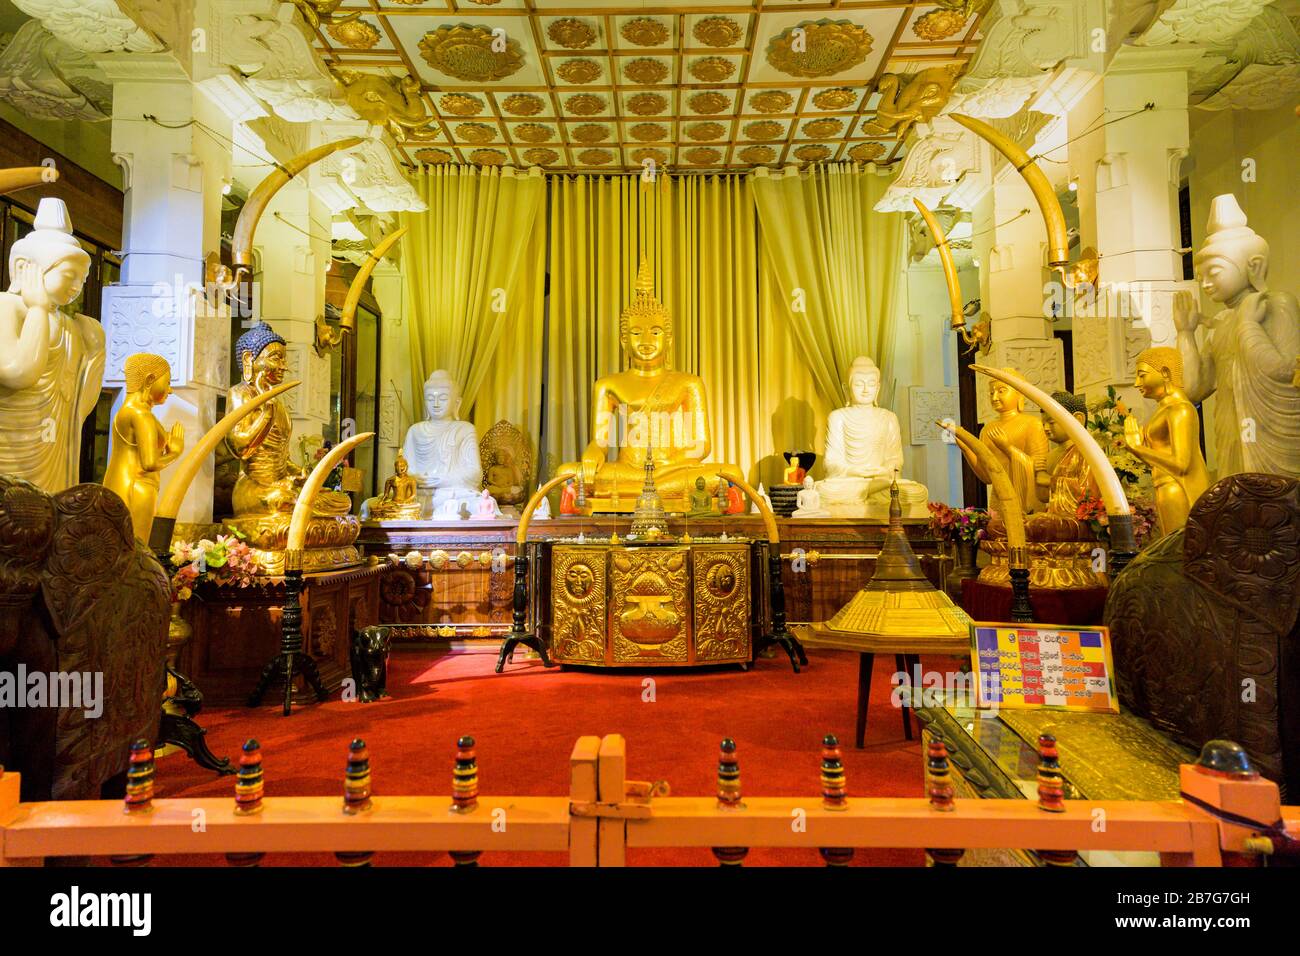 Sri Lanka Kandy Sinhala ancient capital Sri Dalada Maligawa Temple of the Sacred Tooth Relic Buddhist Buddhism interior Stock Photo